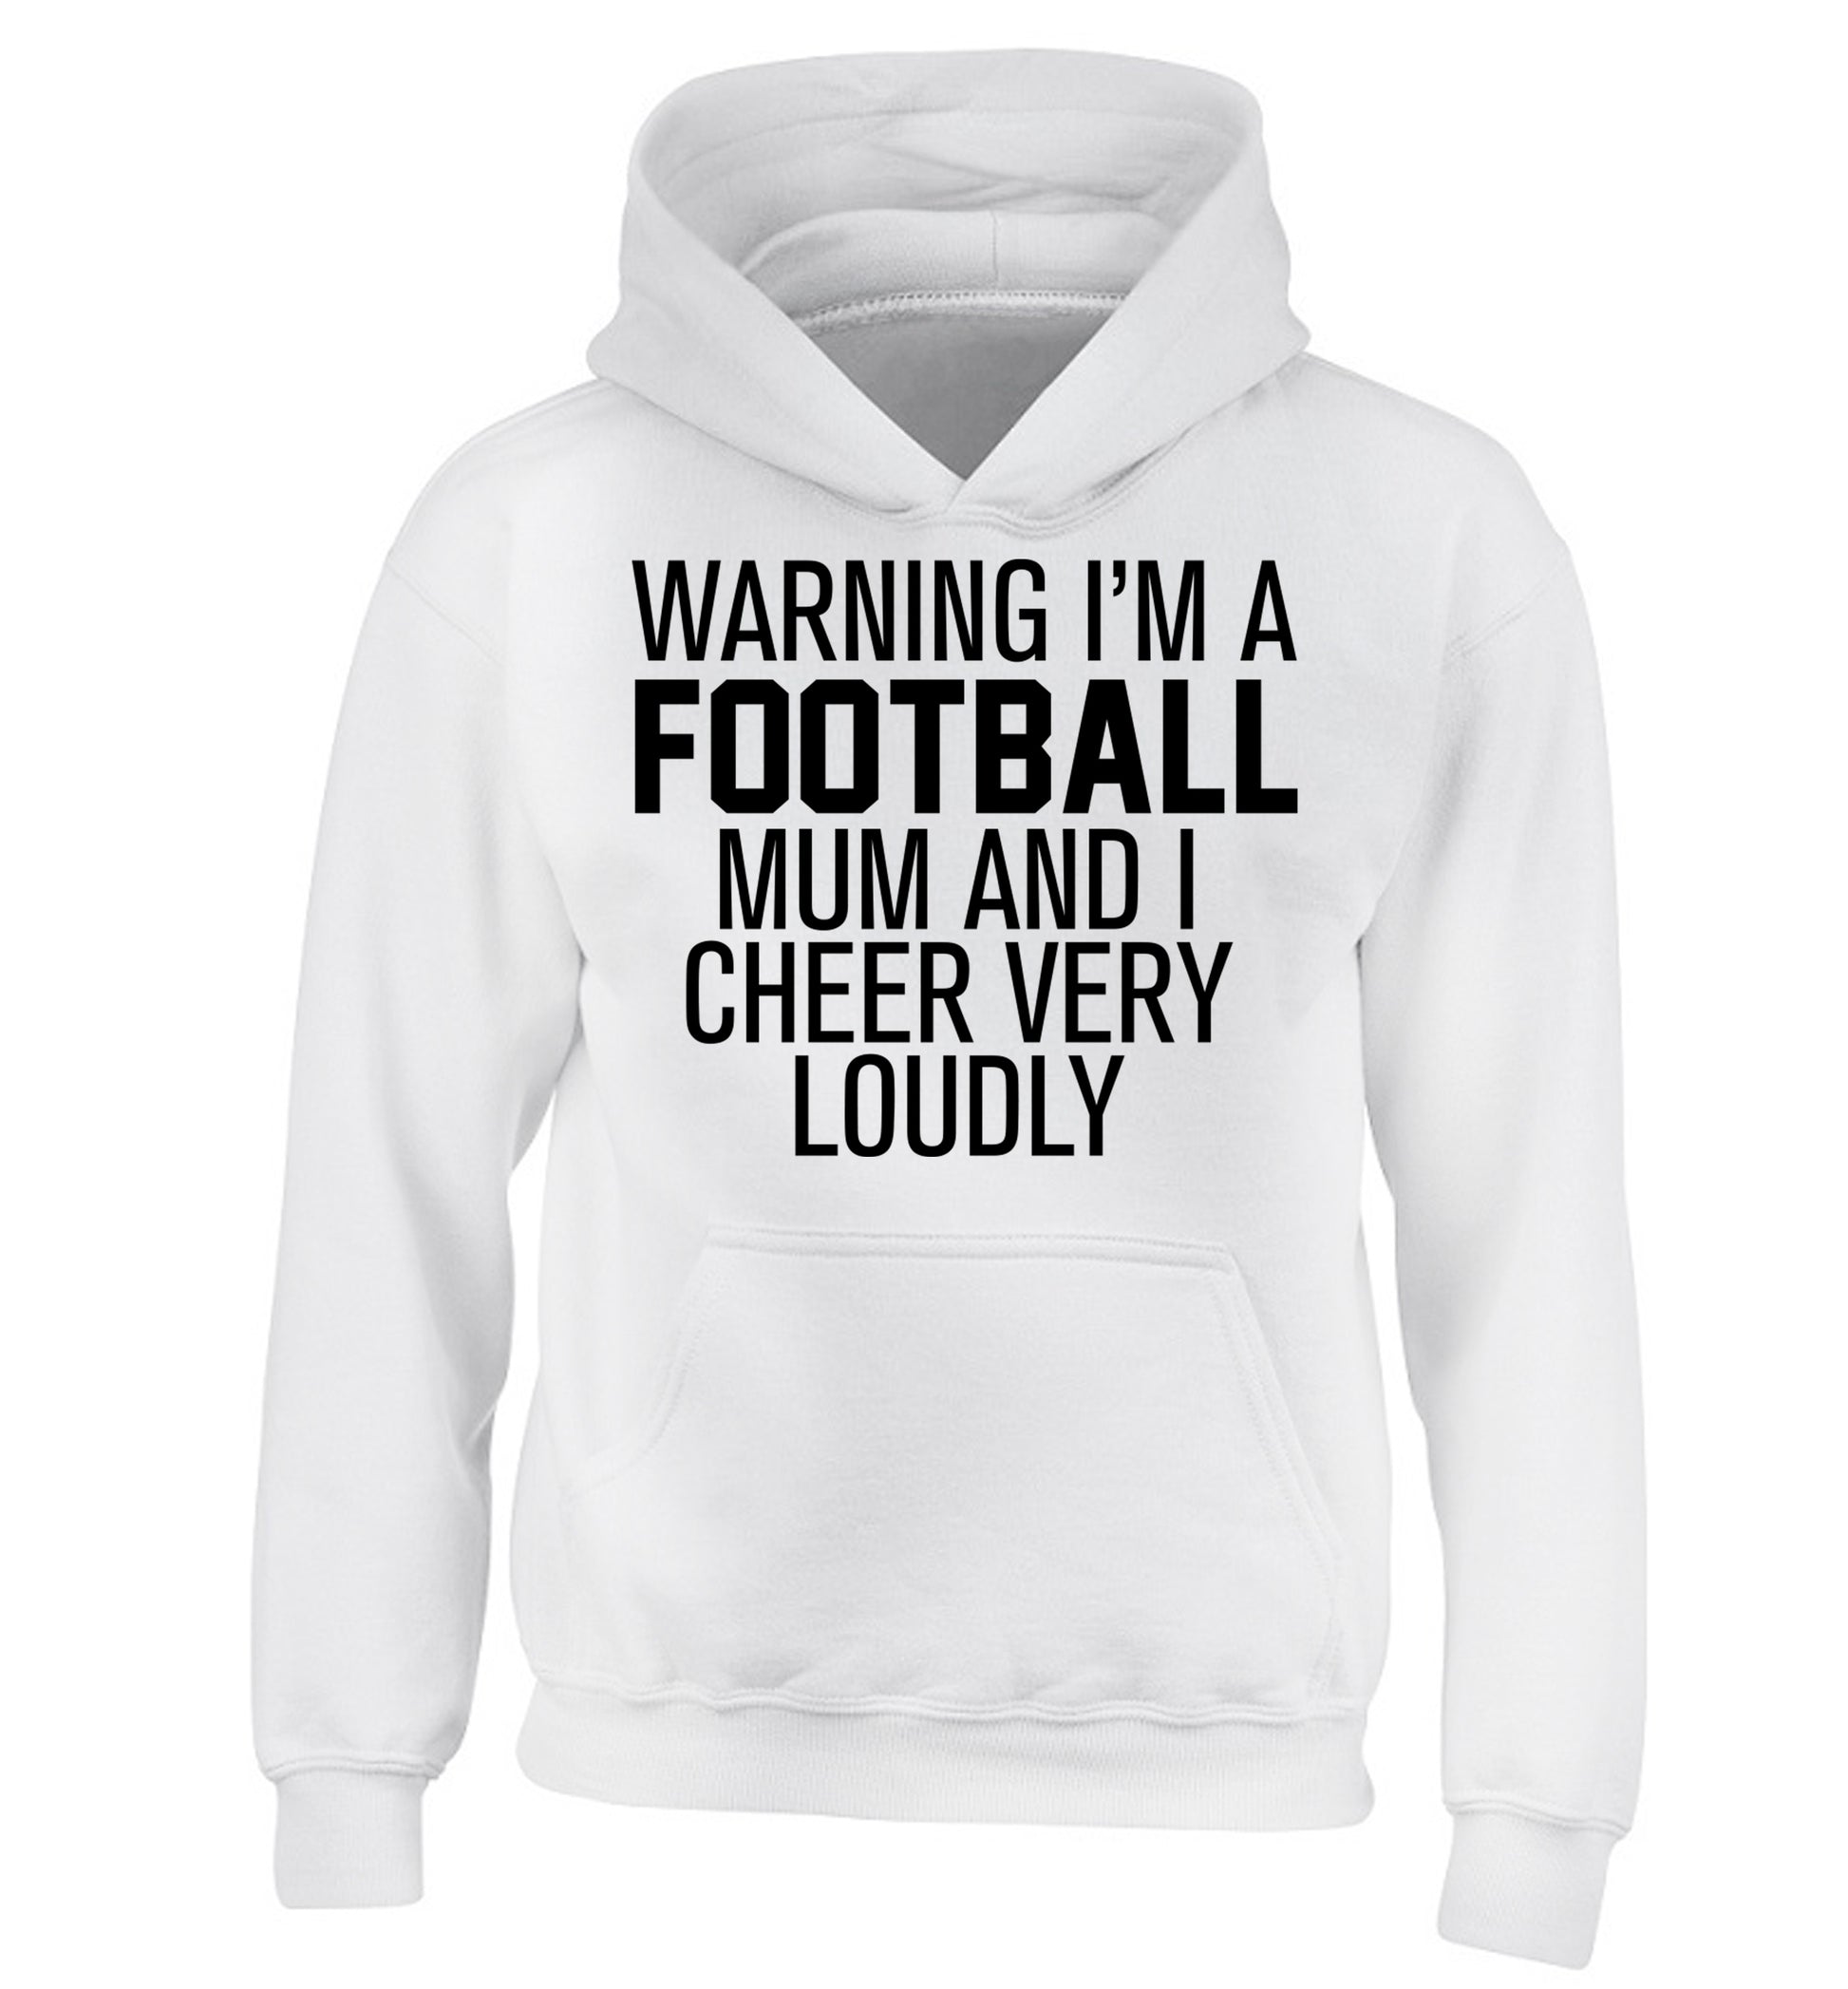 Warning I'm a football mum and I cheer very loudly children's white hoodie 12-14 Years